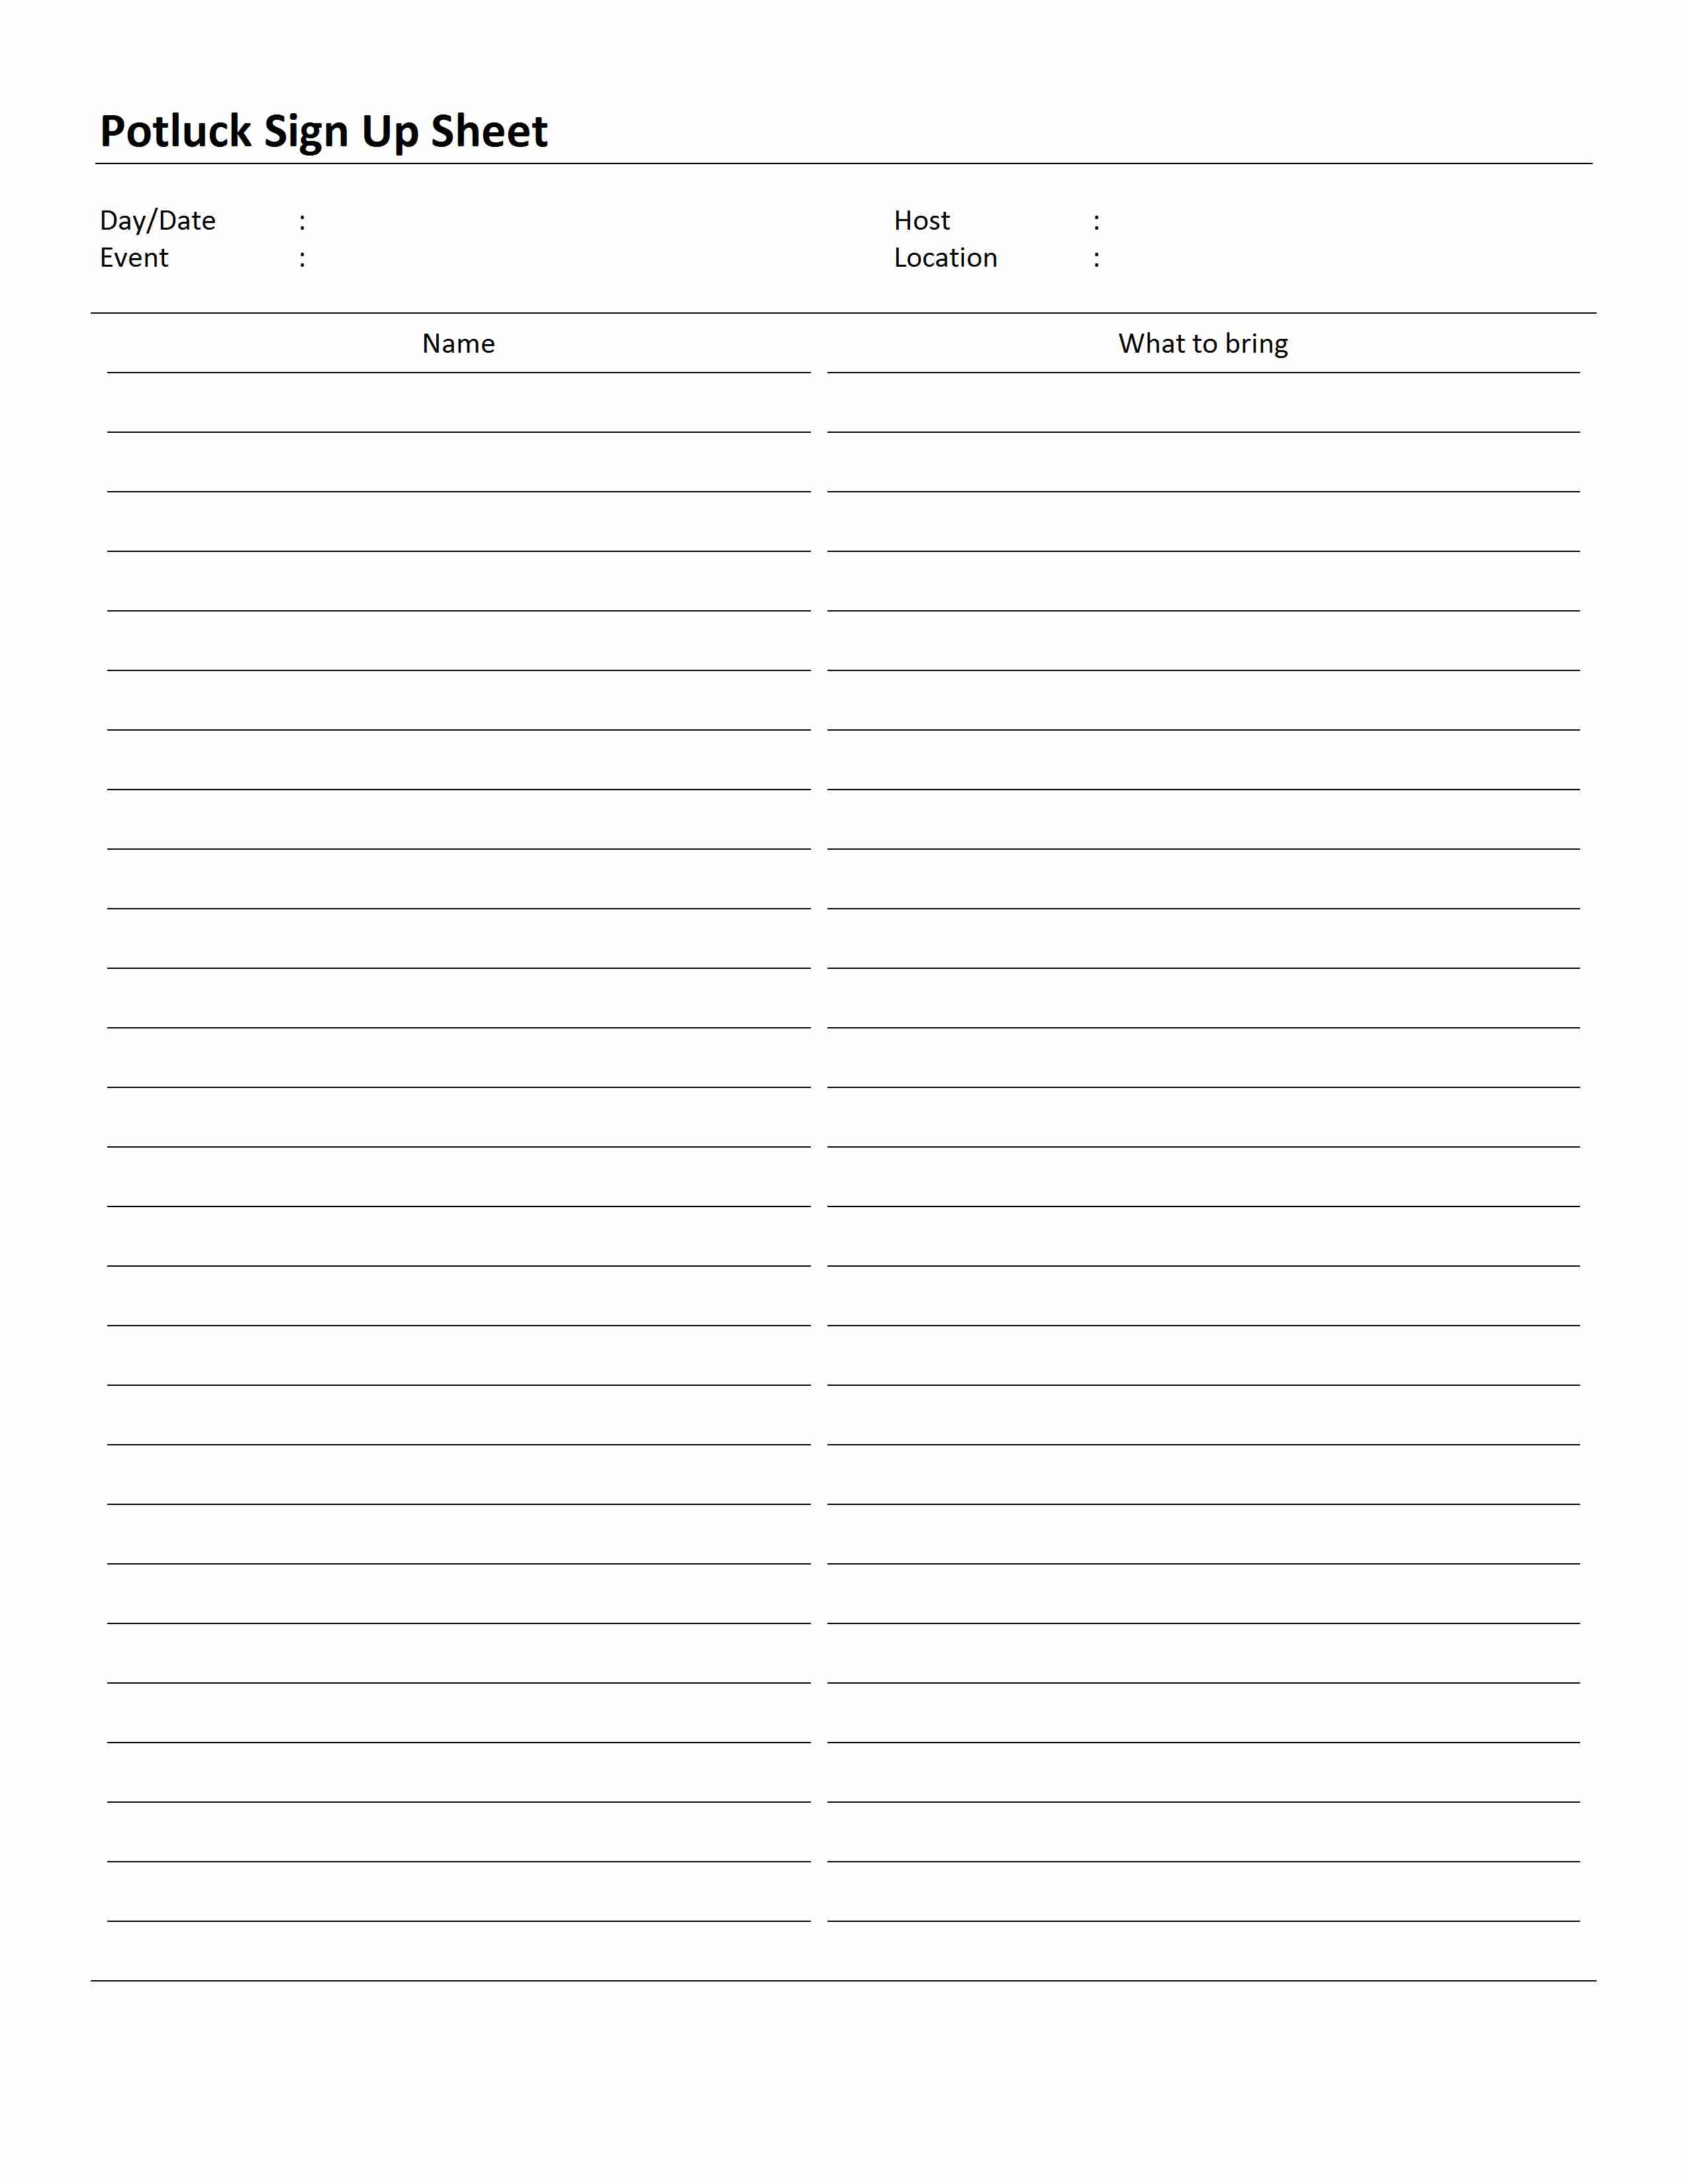 printable-potluck-sign-up-sheet